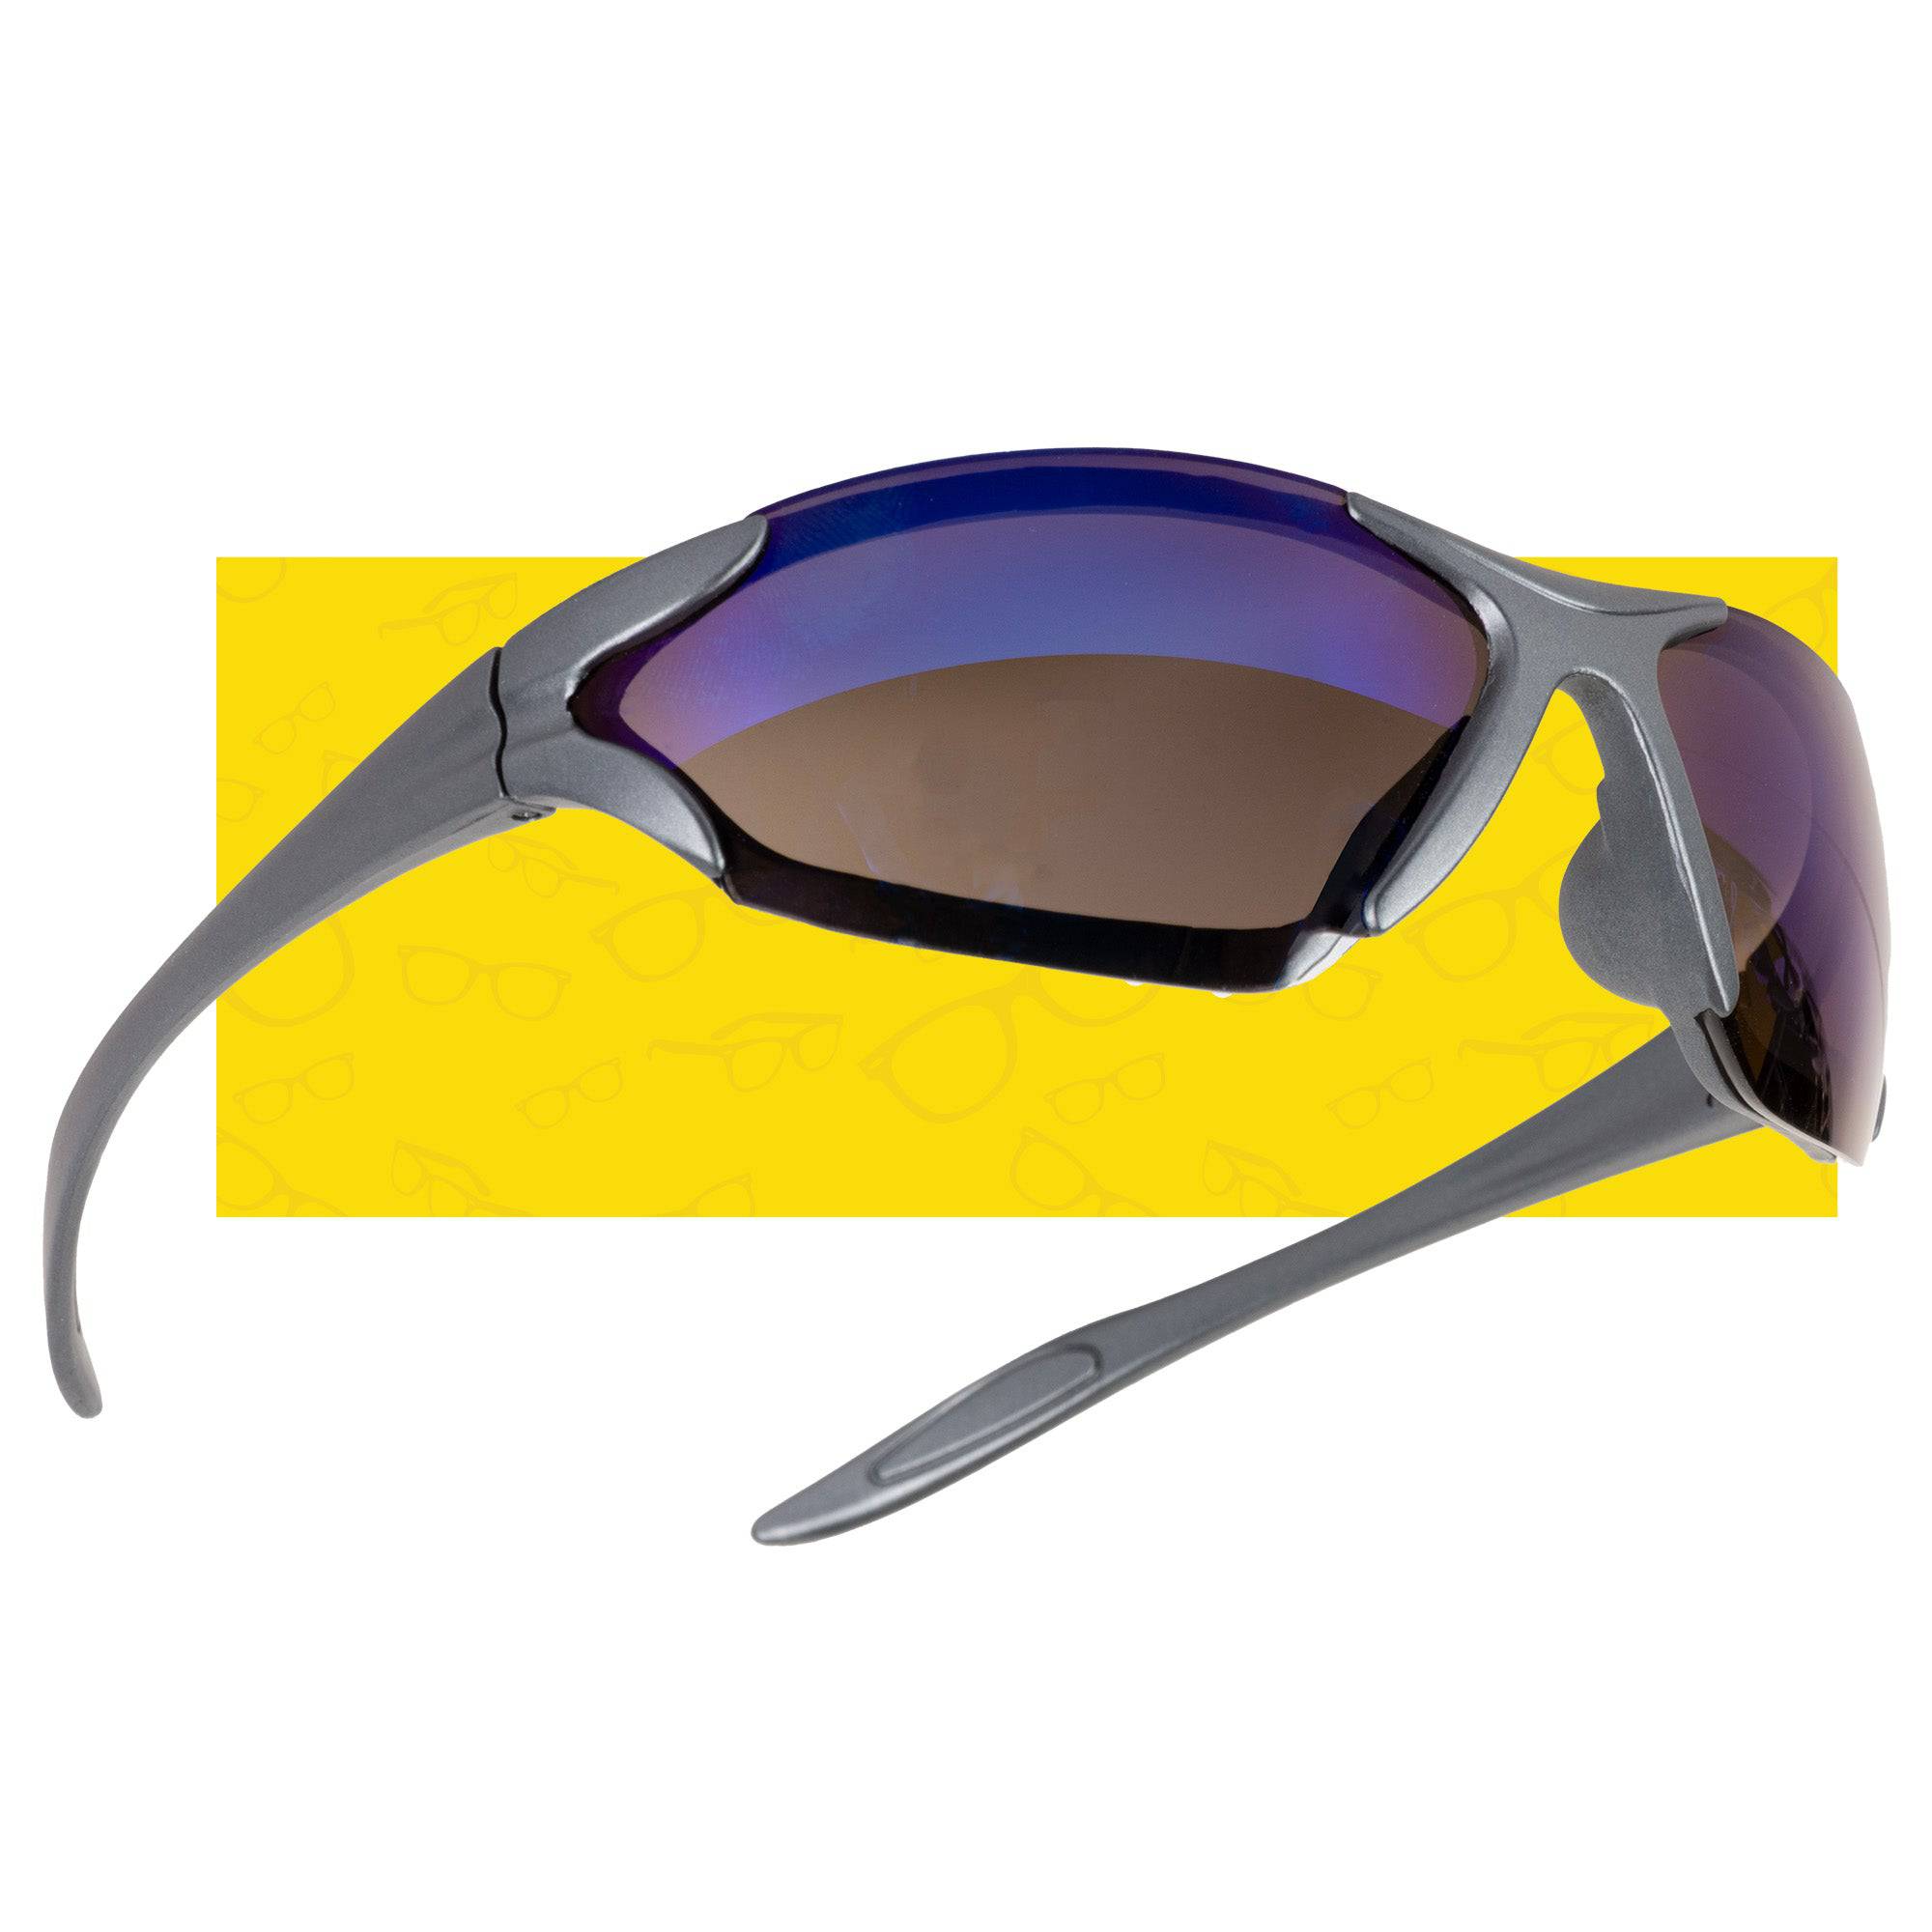 Sport Sunglasses - Foster Grant - DSL